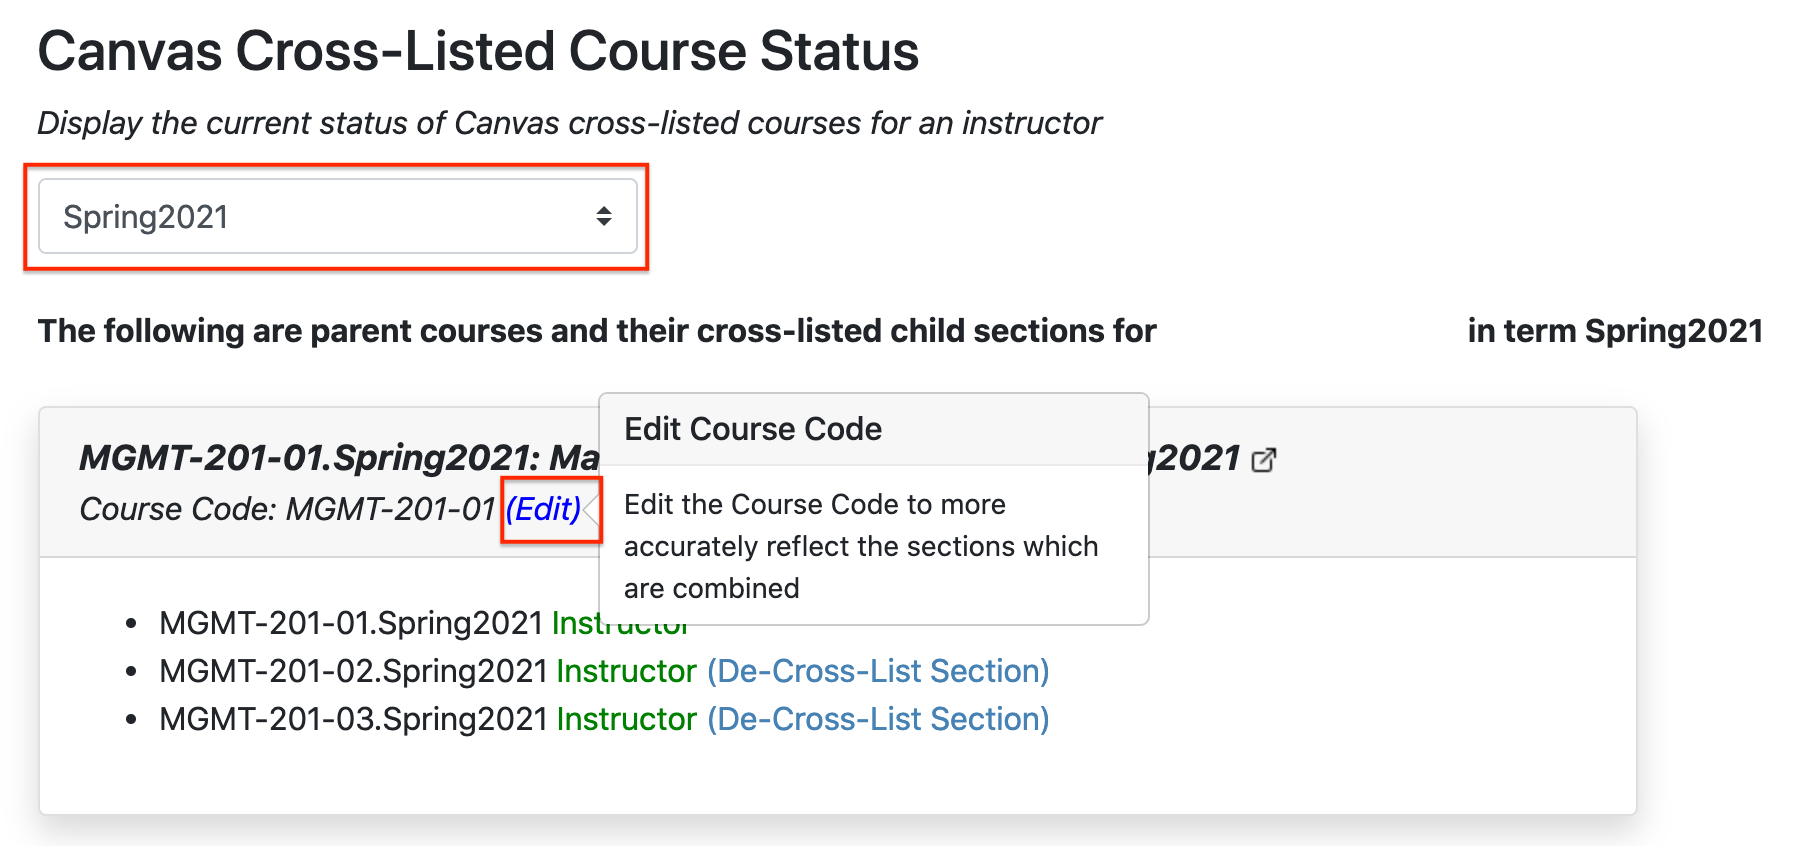 edit course code